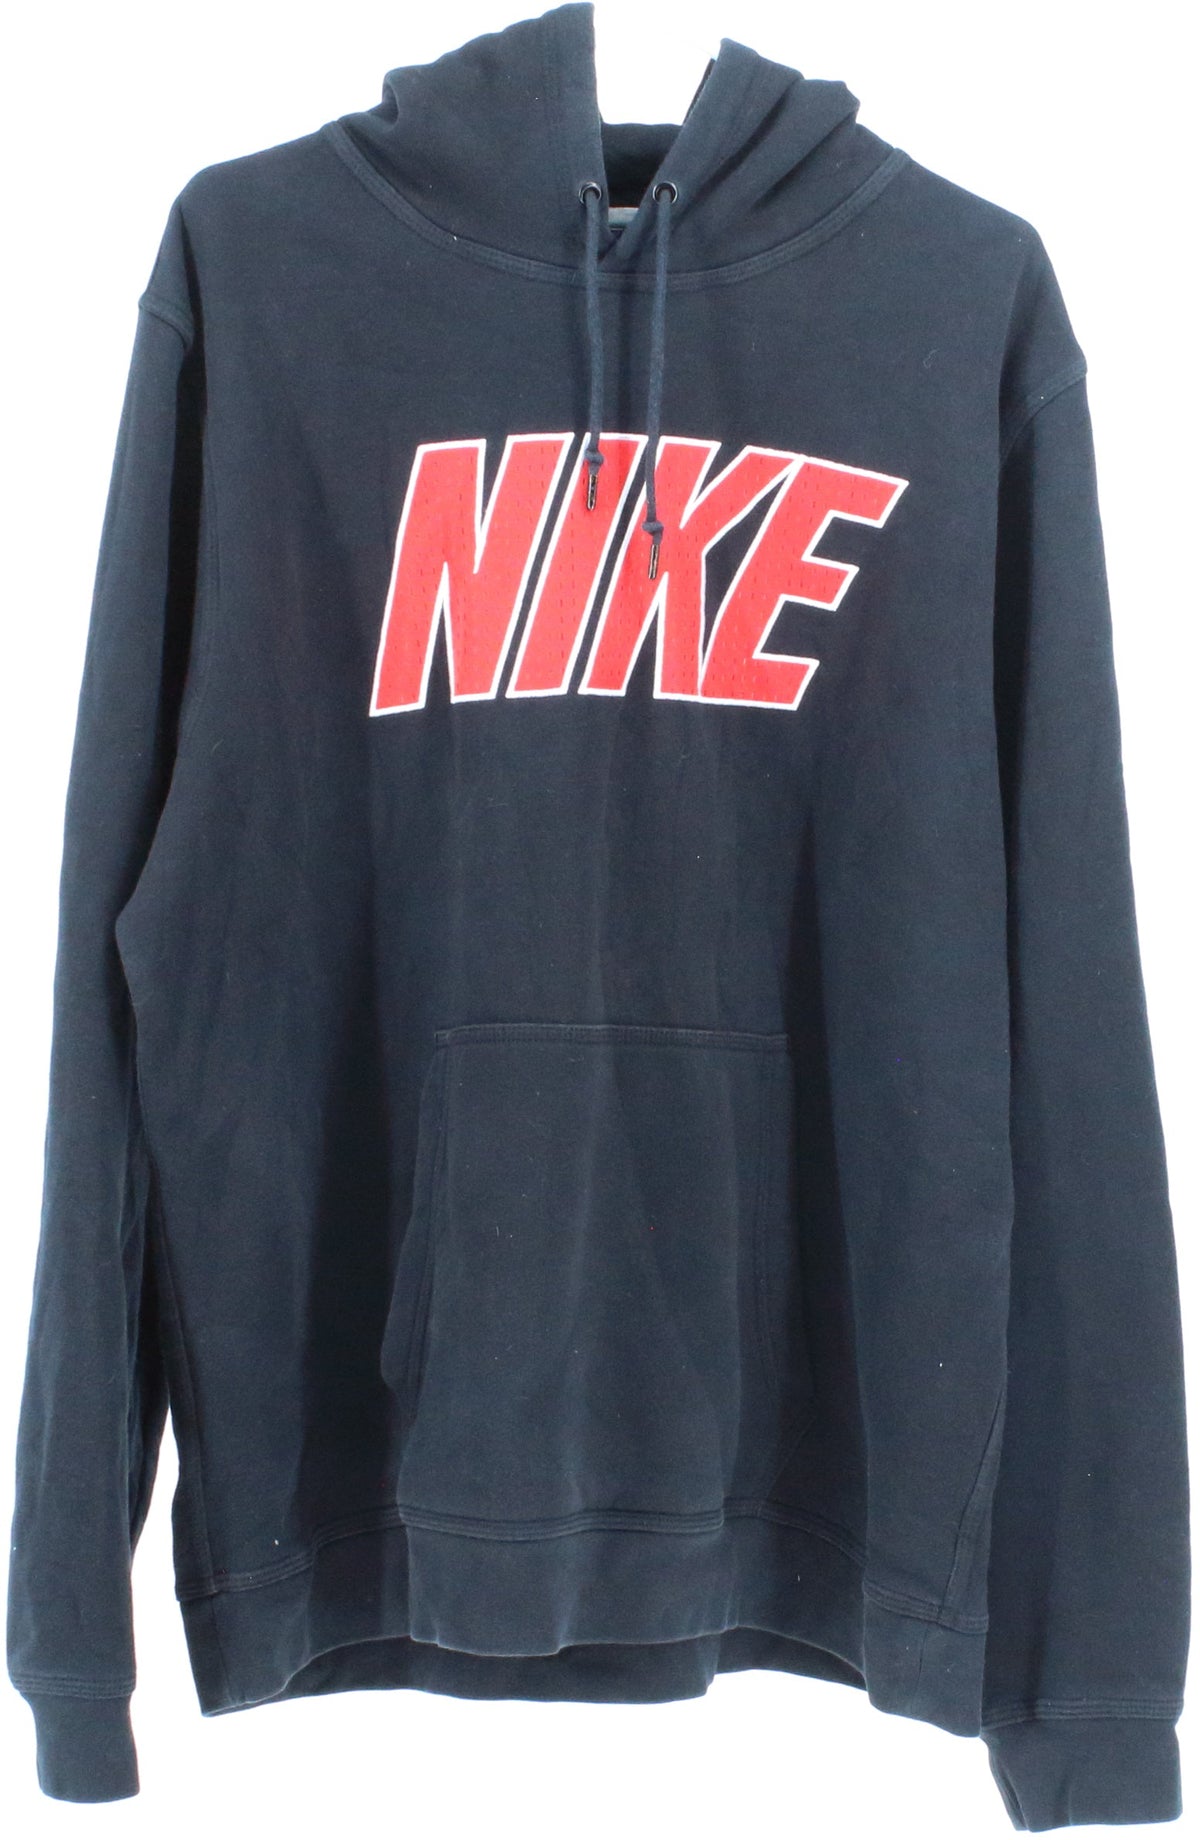 Nike Black Hooded Sweatshirt With Red Logo